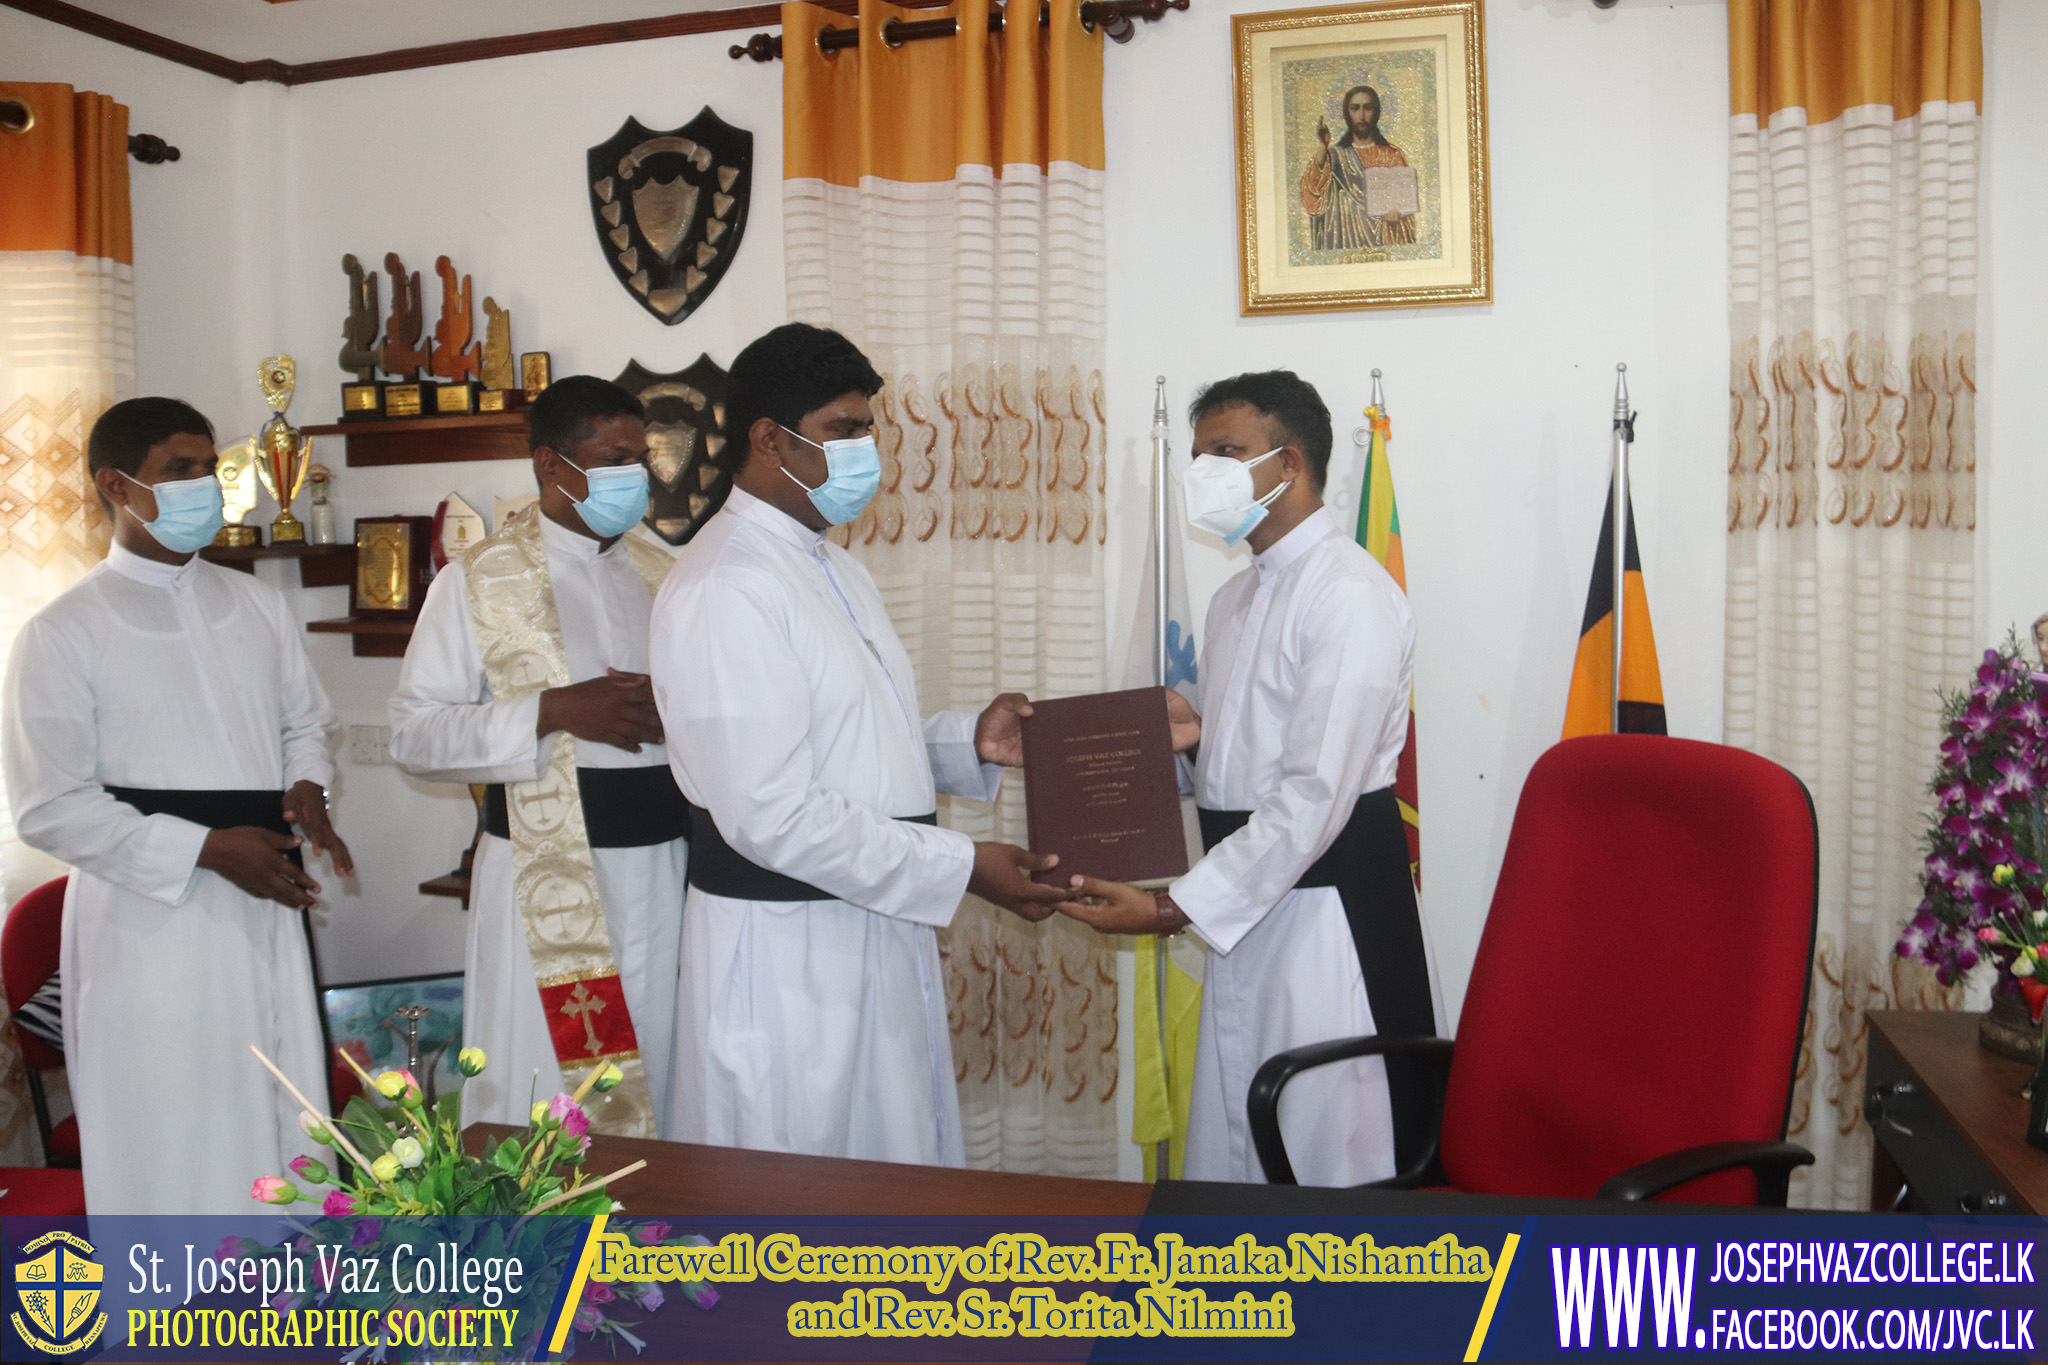 Farewell Ceremony Of Rev. Fr. Janaka Nishantha And Rev. Sr. Torita Nilmini - St. Joseph Vaz College - Wennappuwa - Sri Lanka